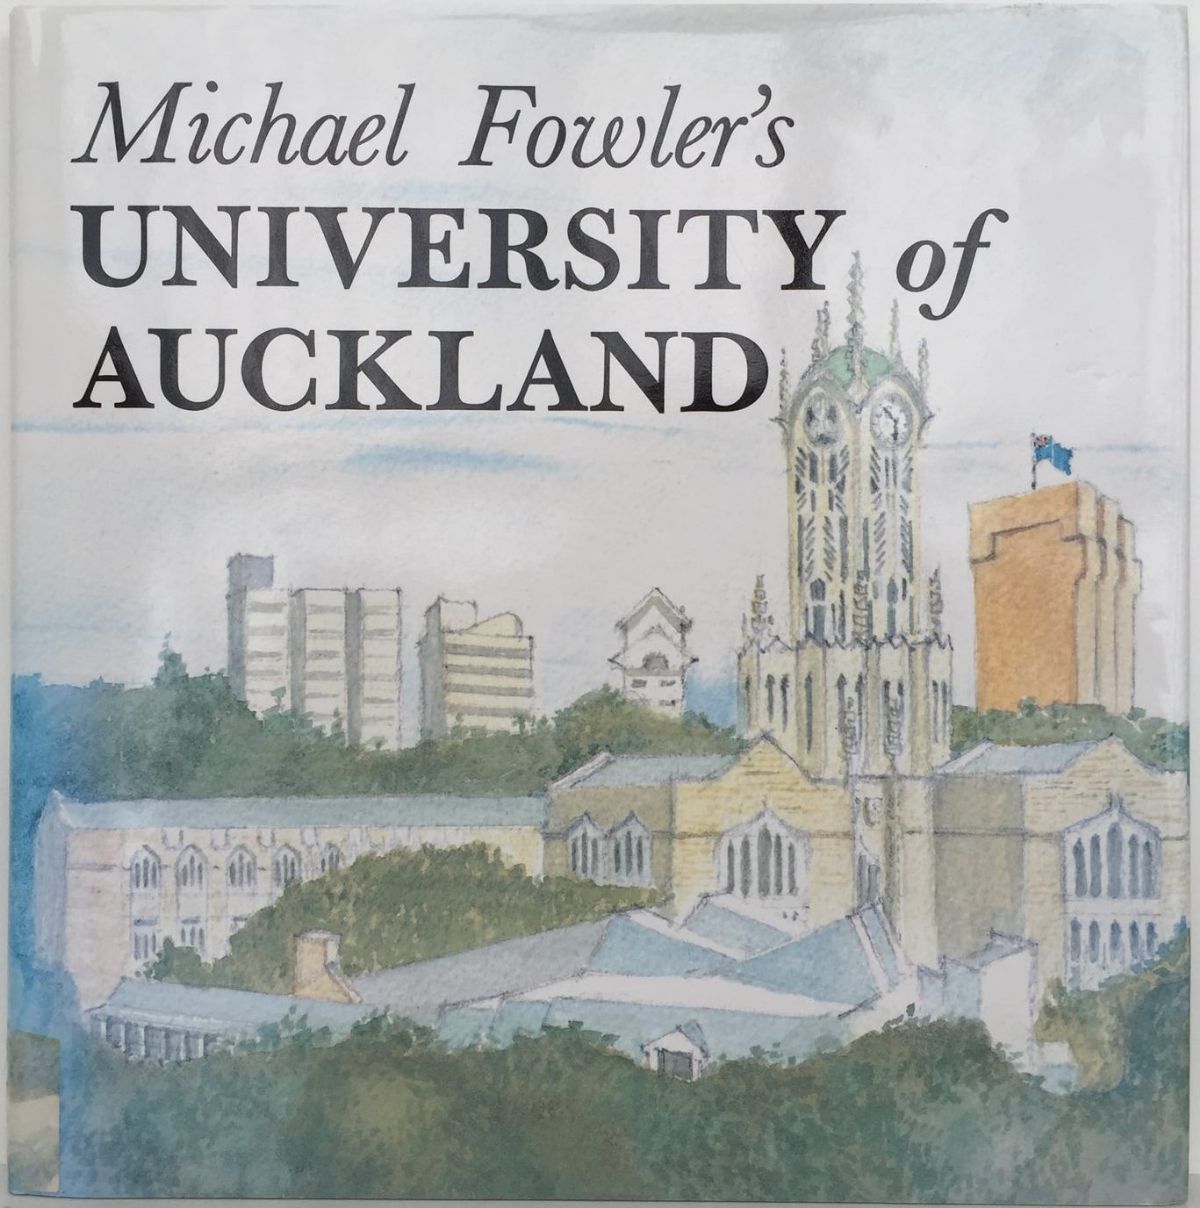 Michael Fowler's UNIVERSITY of AUCKLAND